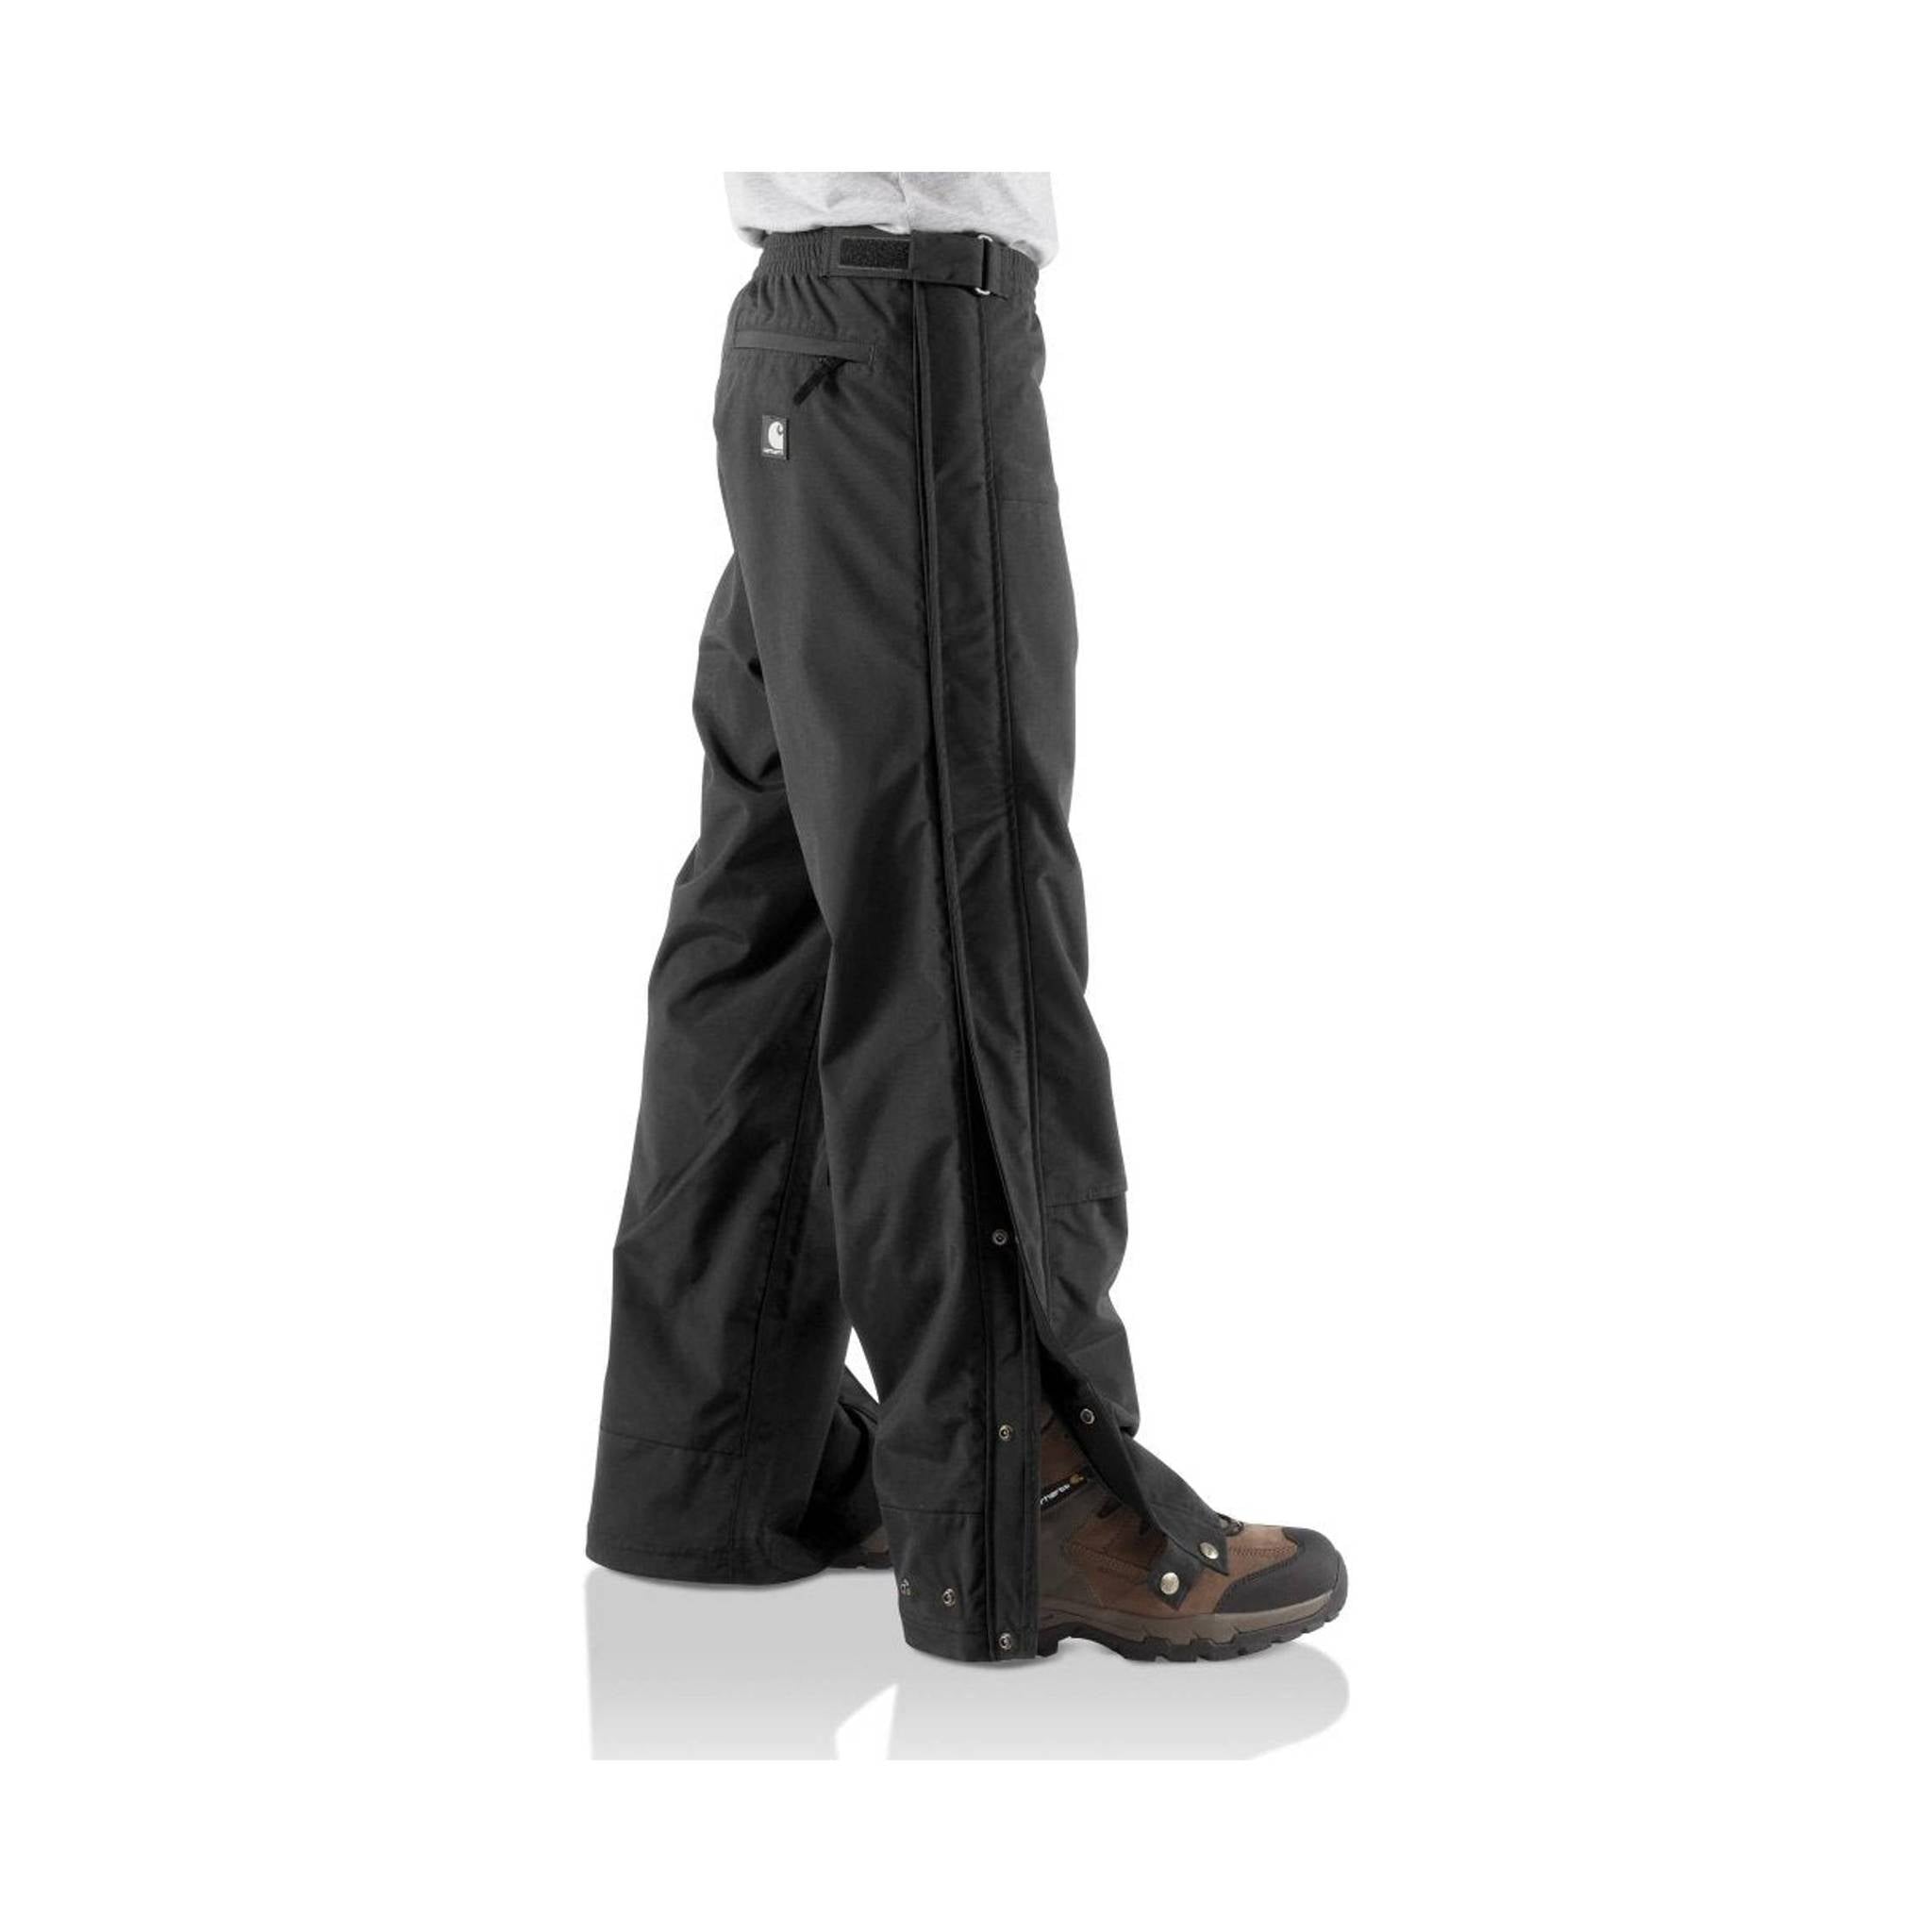 Carhartt Storm Defender Waterproof Rain Pants - Black — Dave's New York